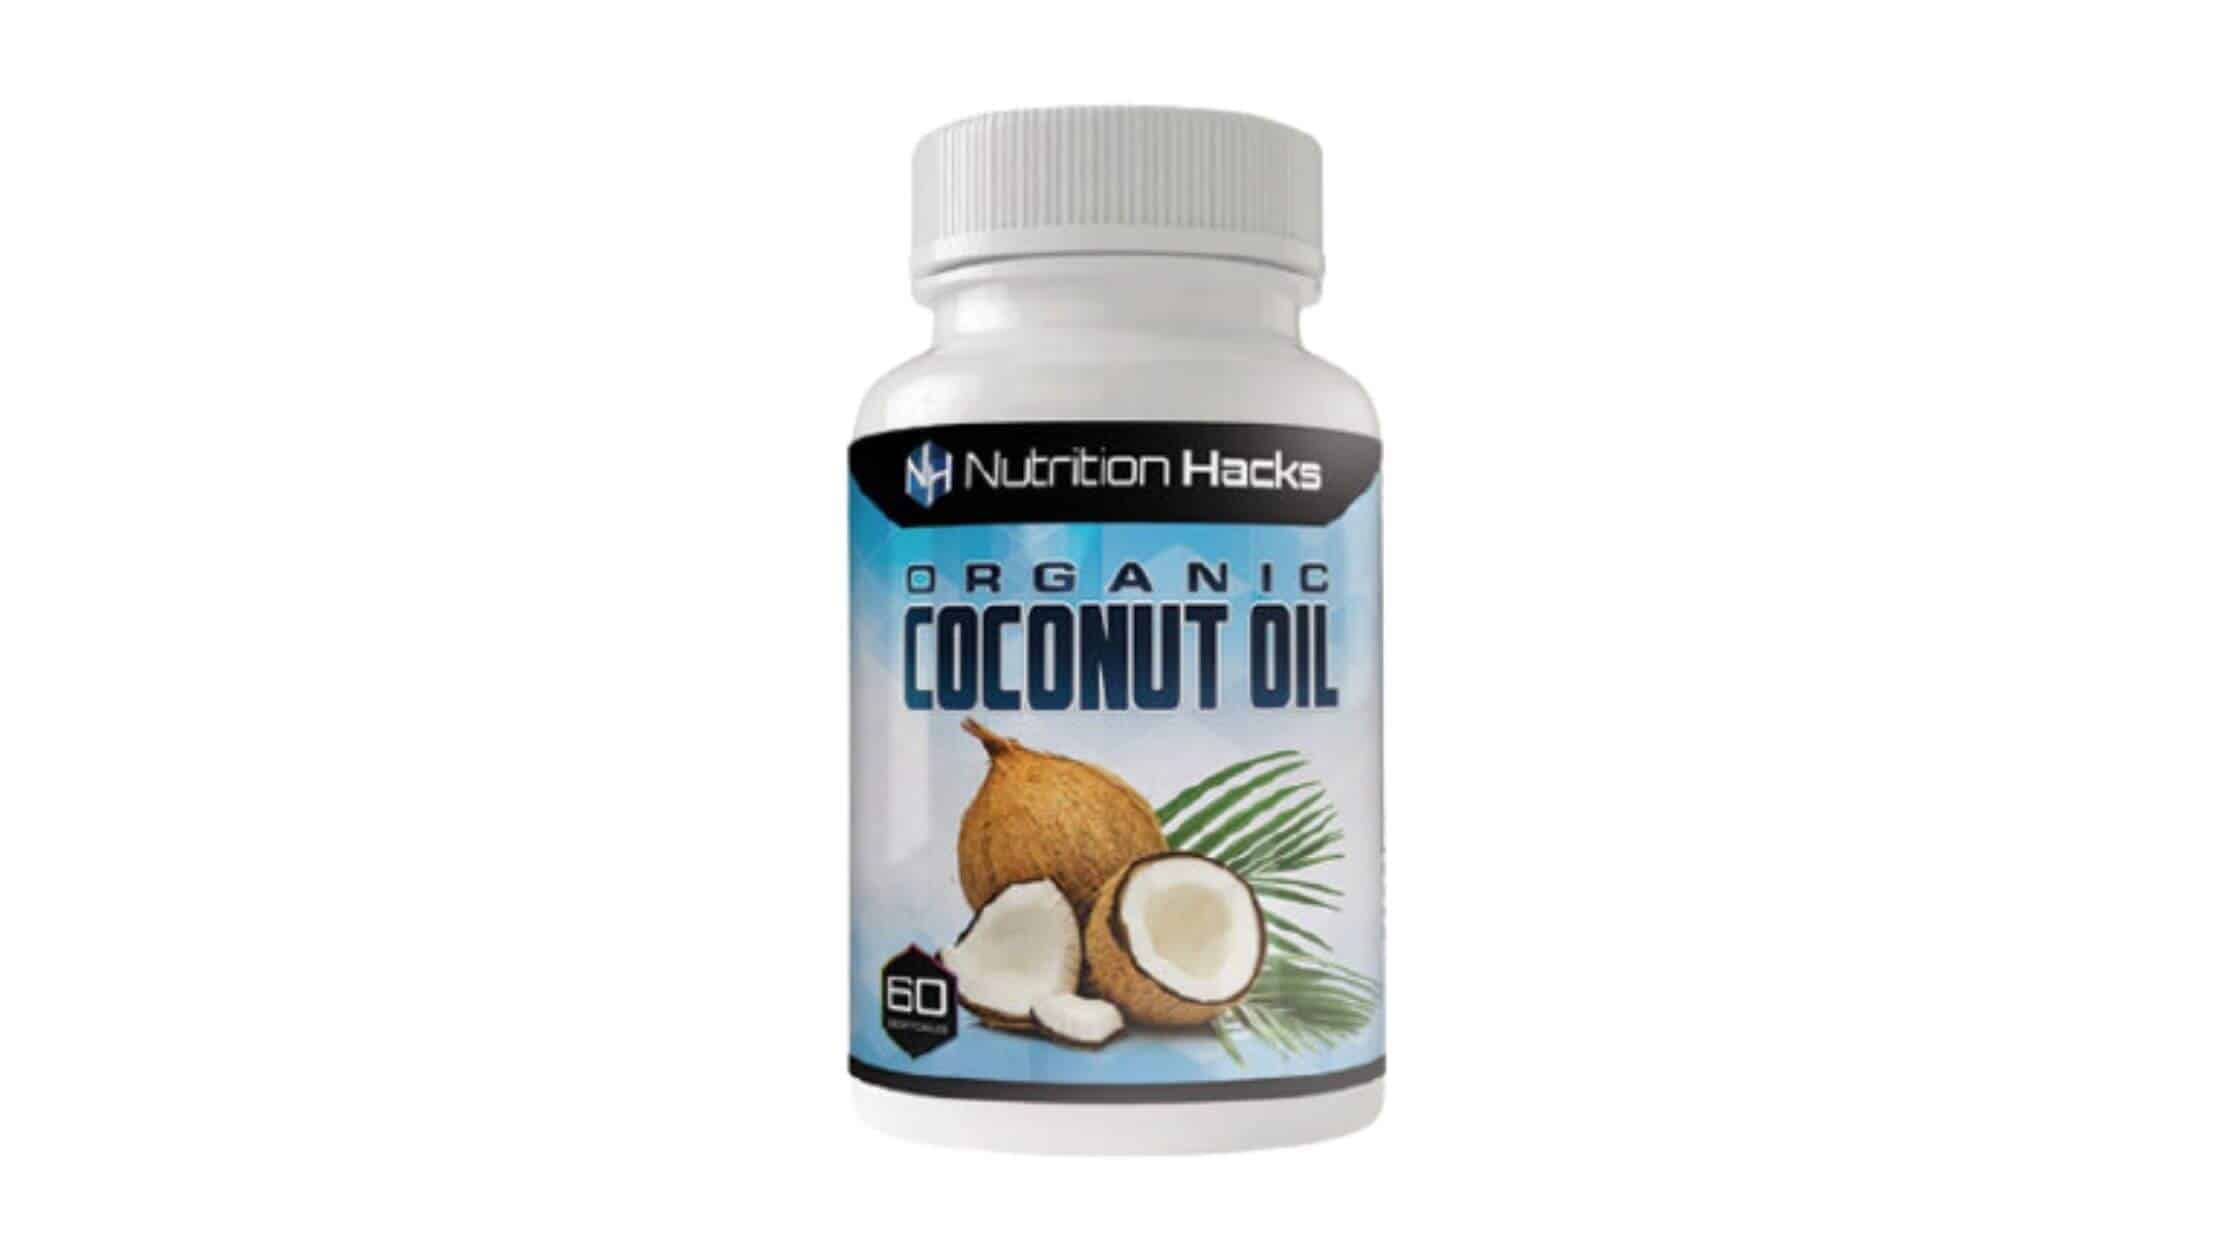 Nutrition Hacks Organic Coconut Oil Reviews